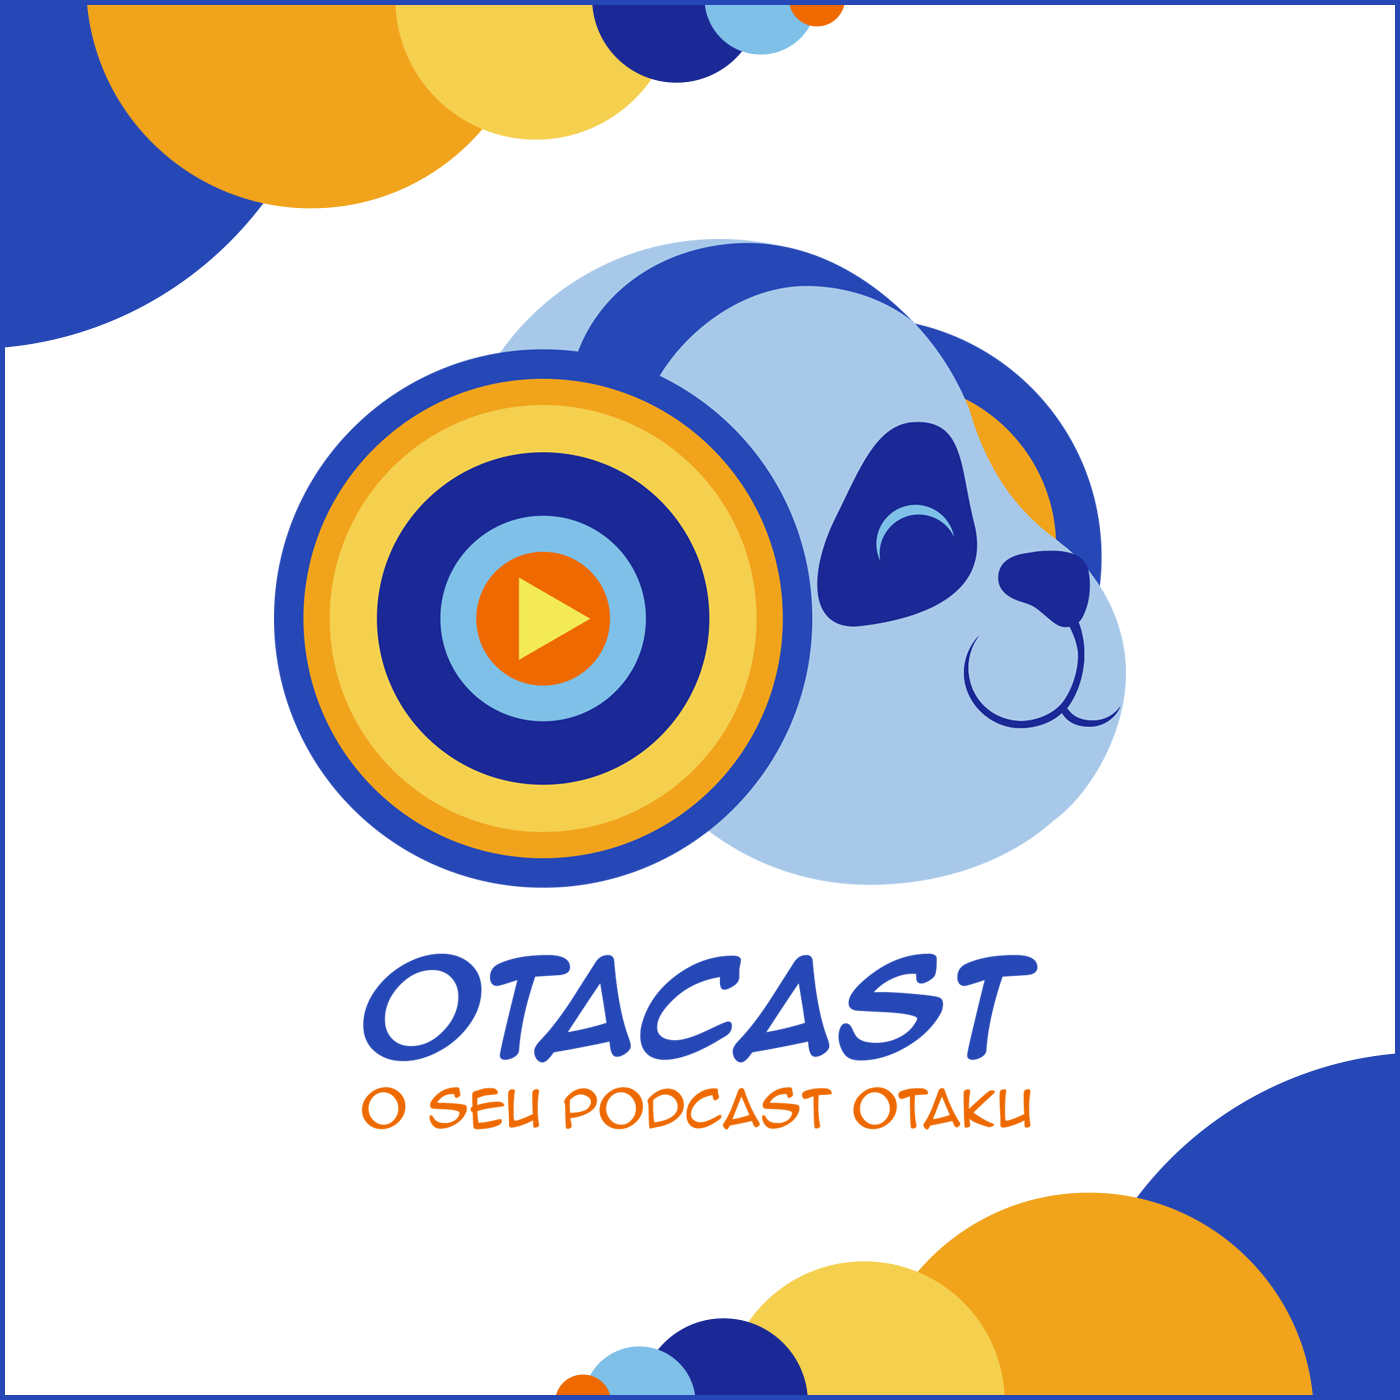 Otacast - Seu Podcast Otaku